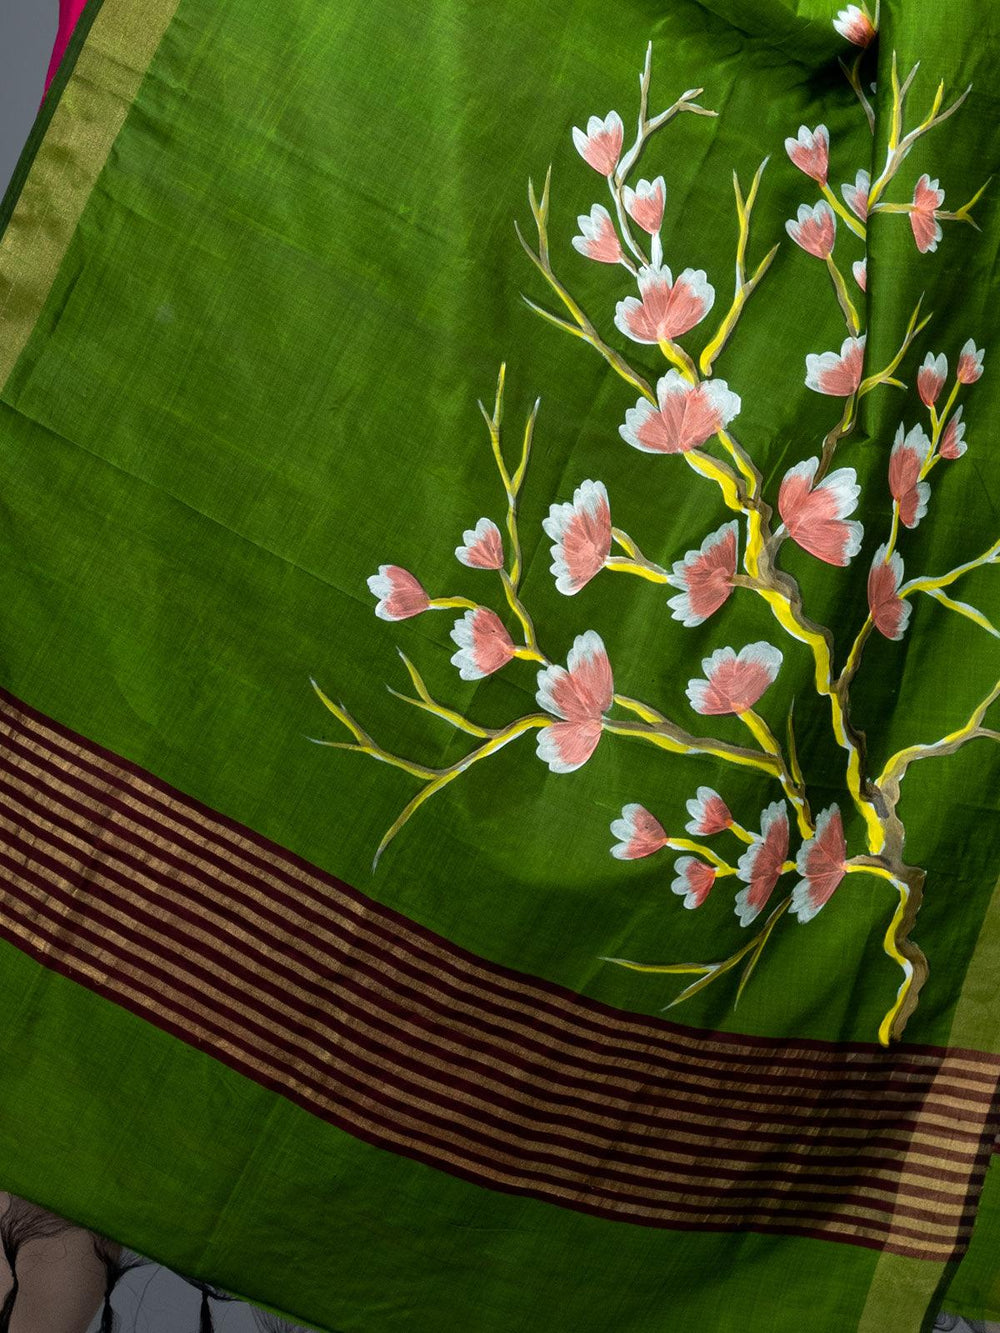 Olive Green Hand Painted Bishnupuri Katan Silk Dupatta - WeaversIndia